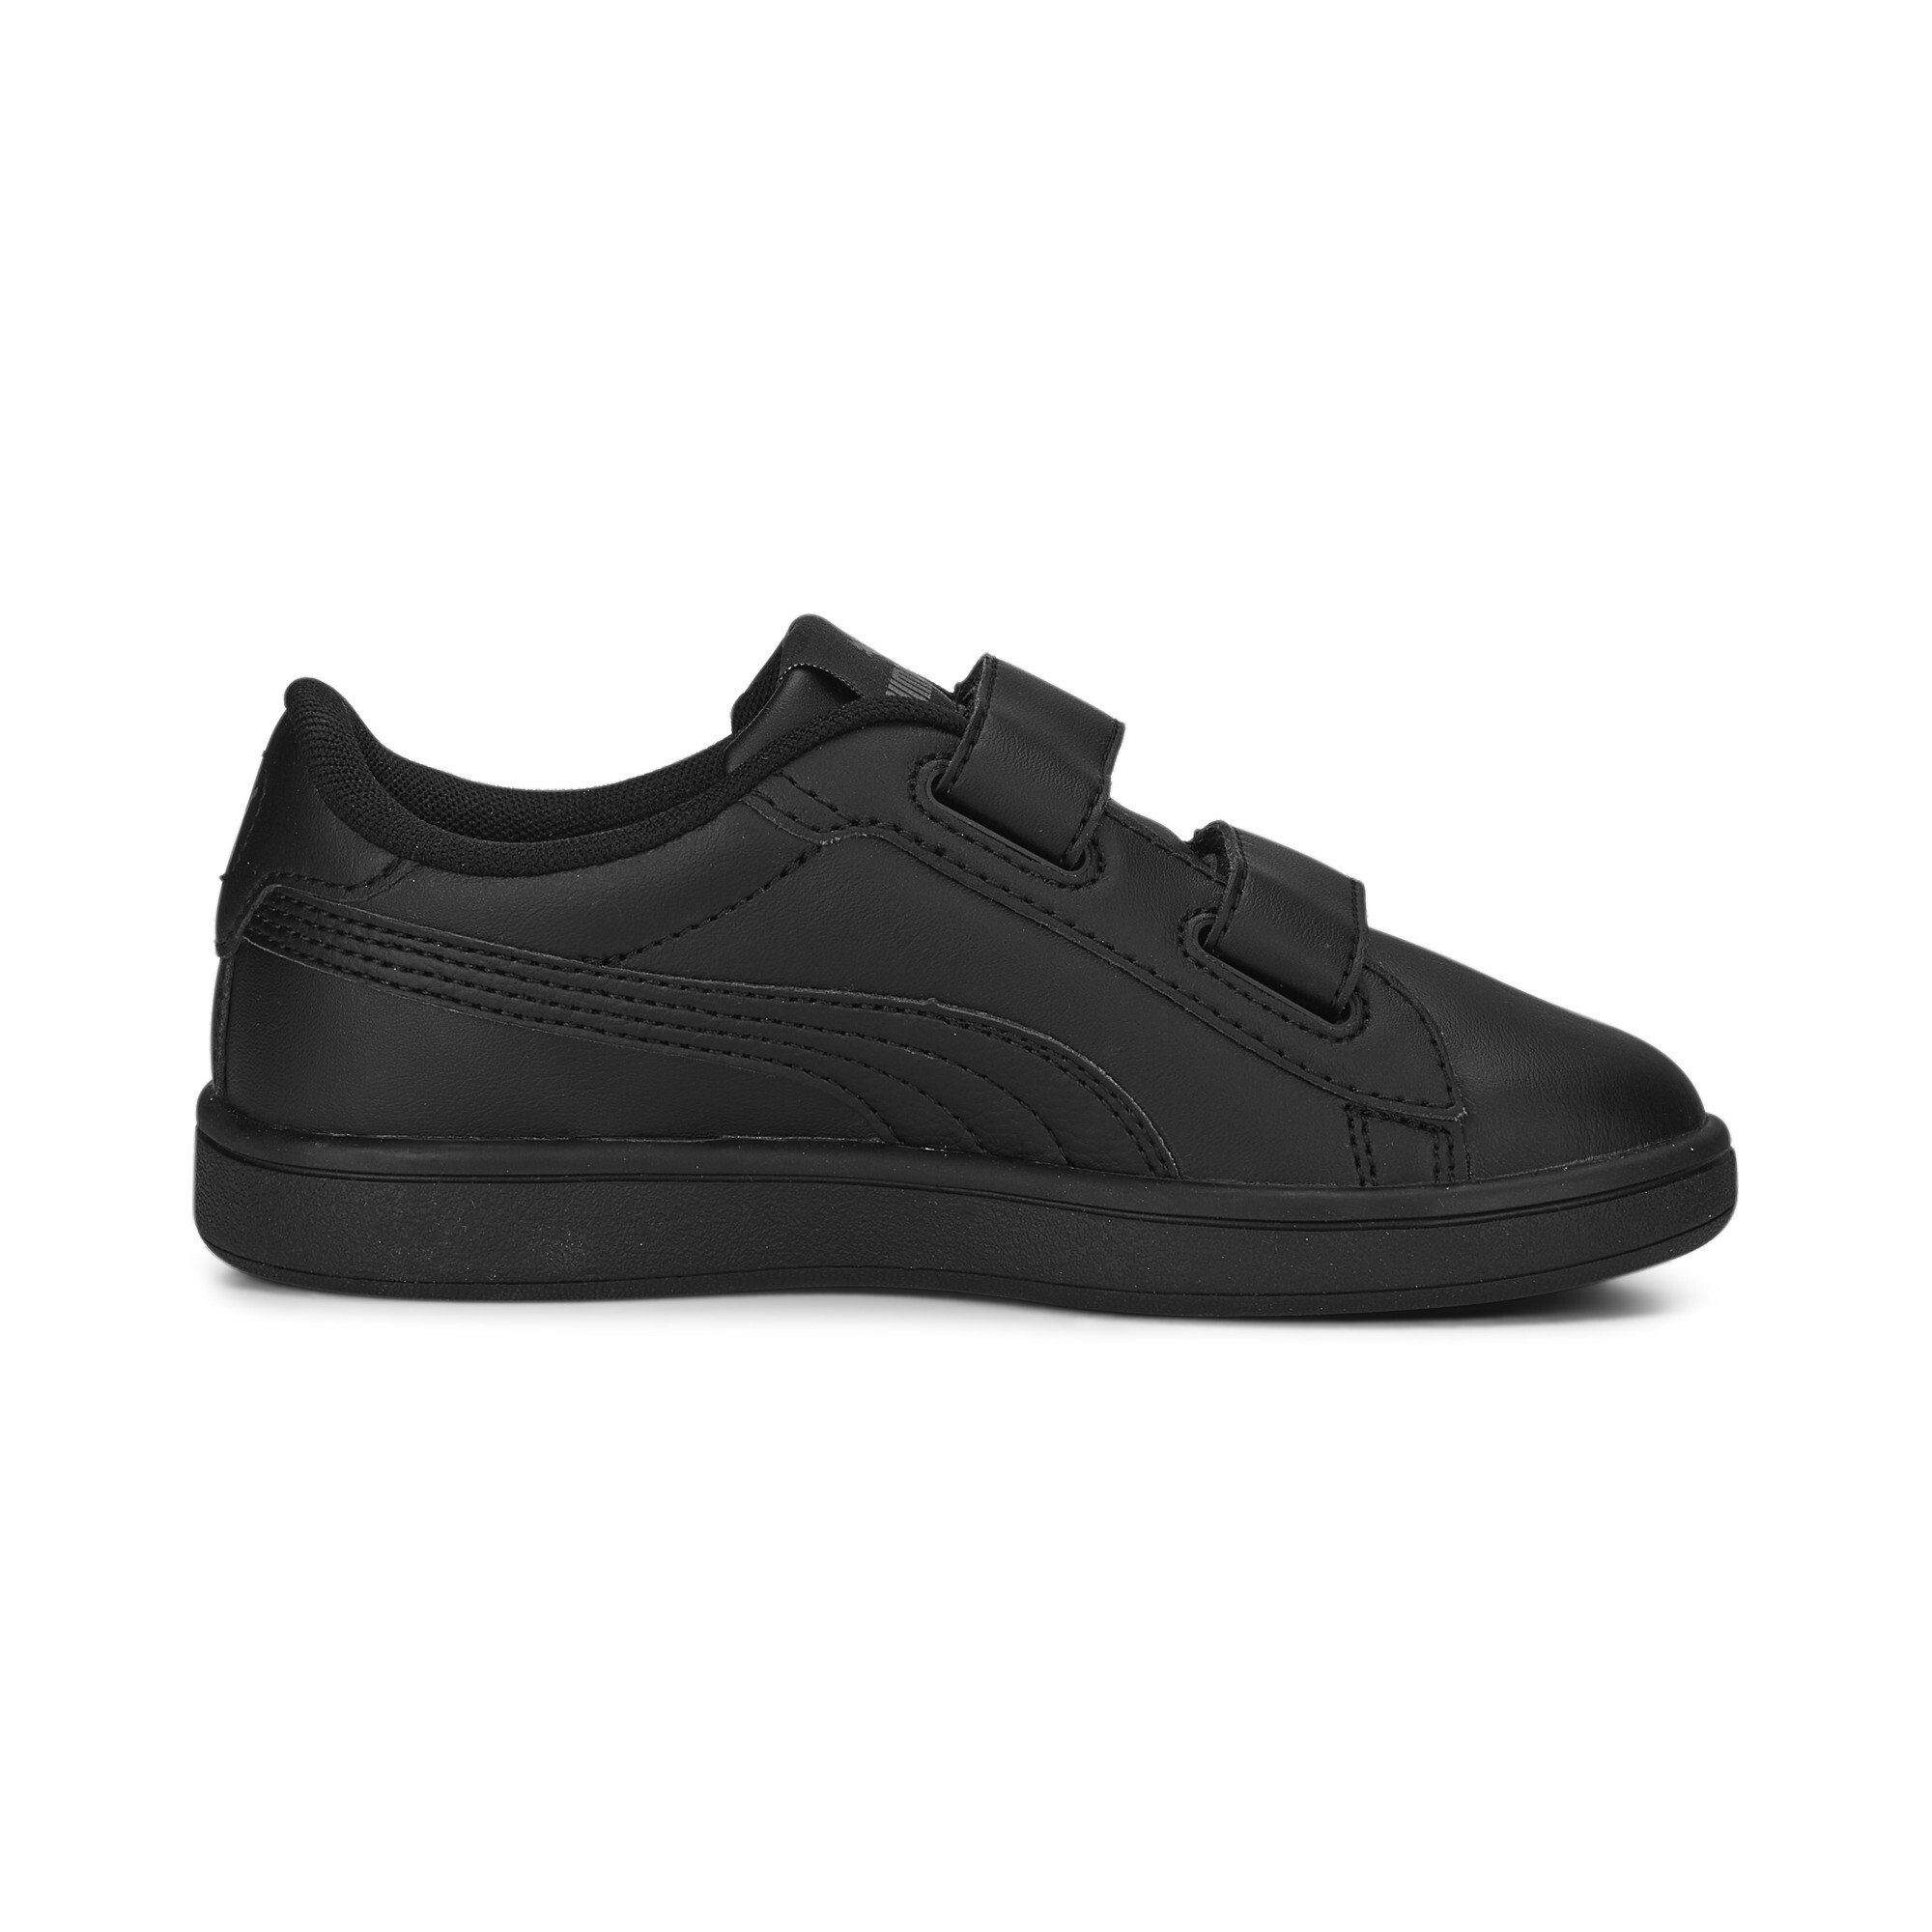 PUMA Smash Sneaker Shadow Leather Sneakers Black Gray 3.0